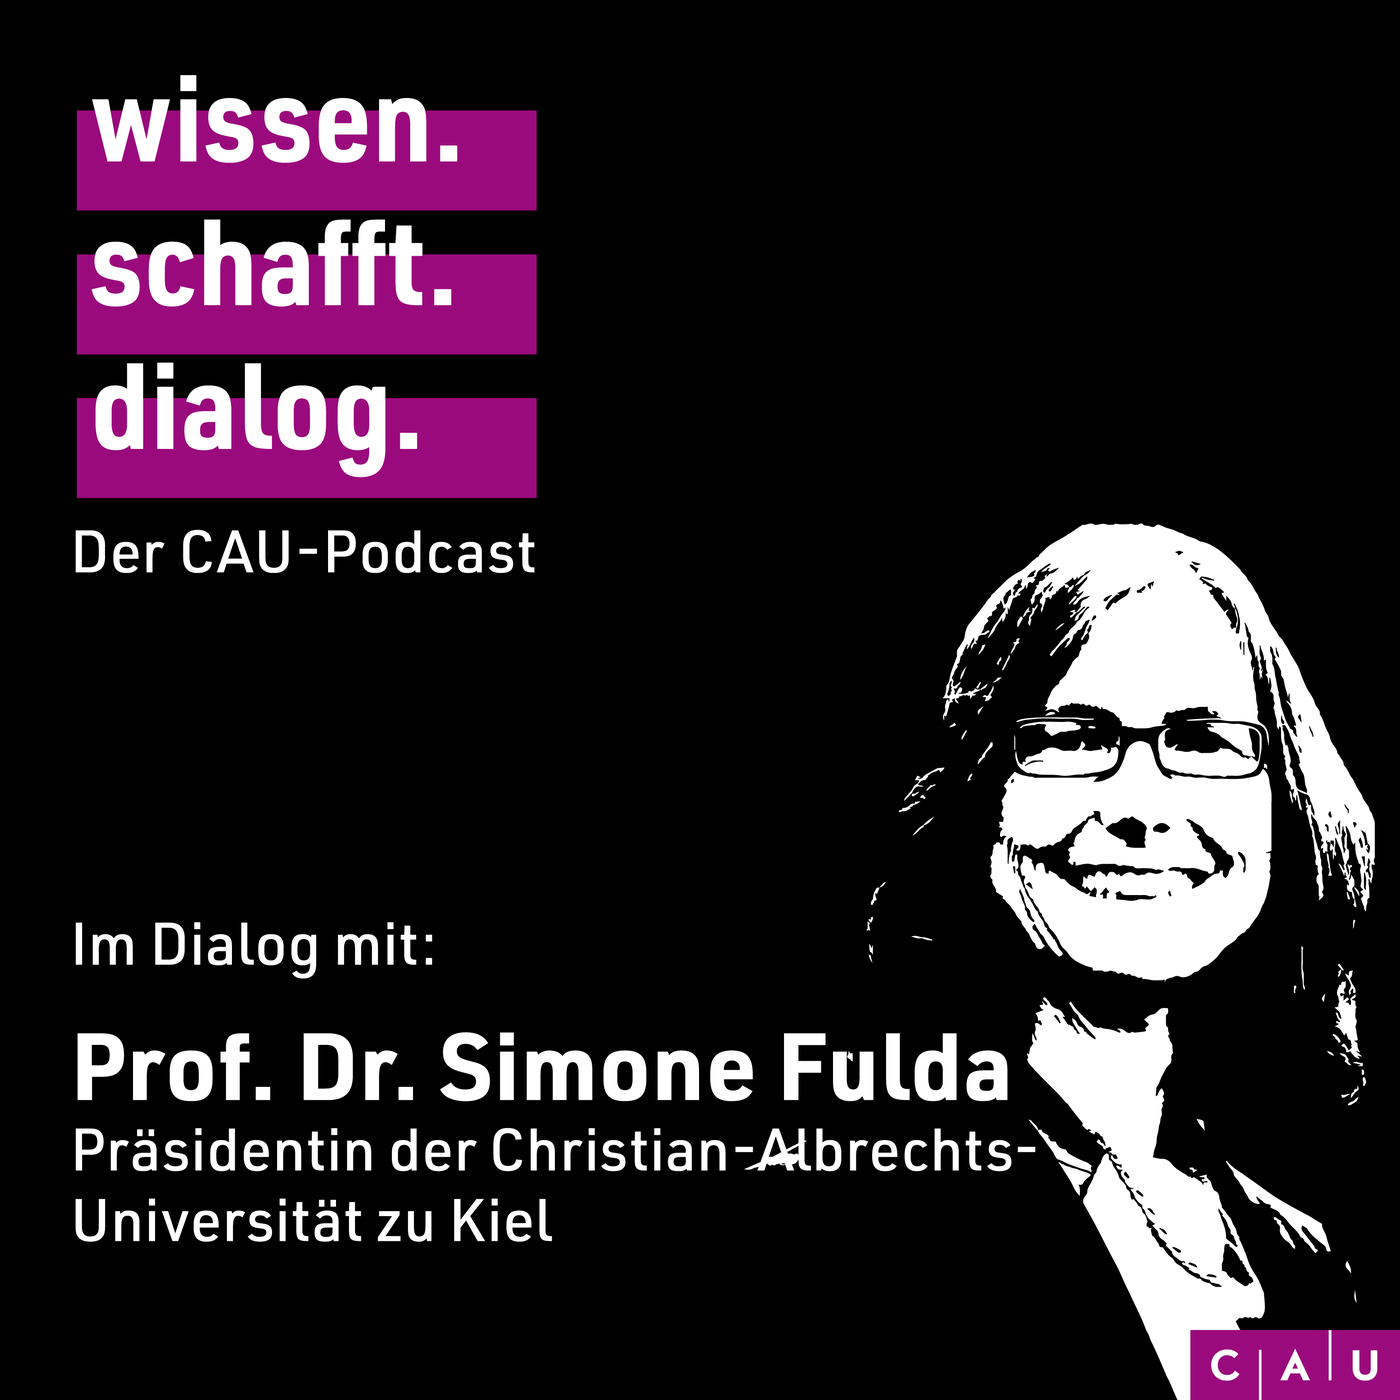 Im Dialog mit: Prof. Dr. Simone Fulda